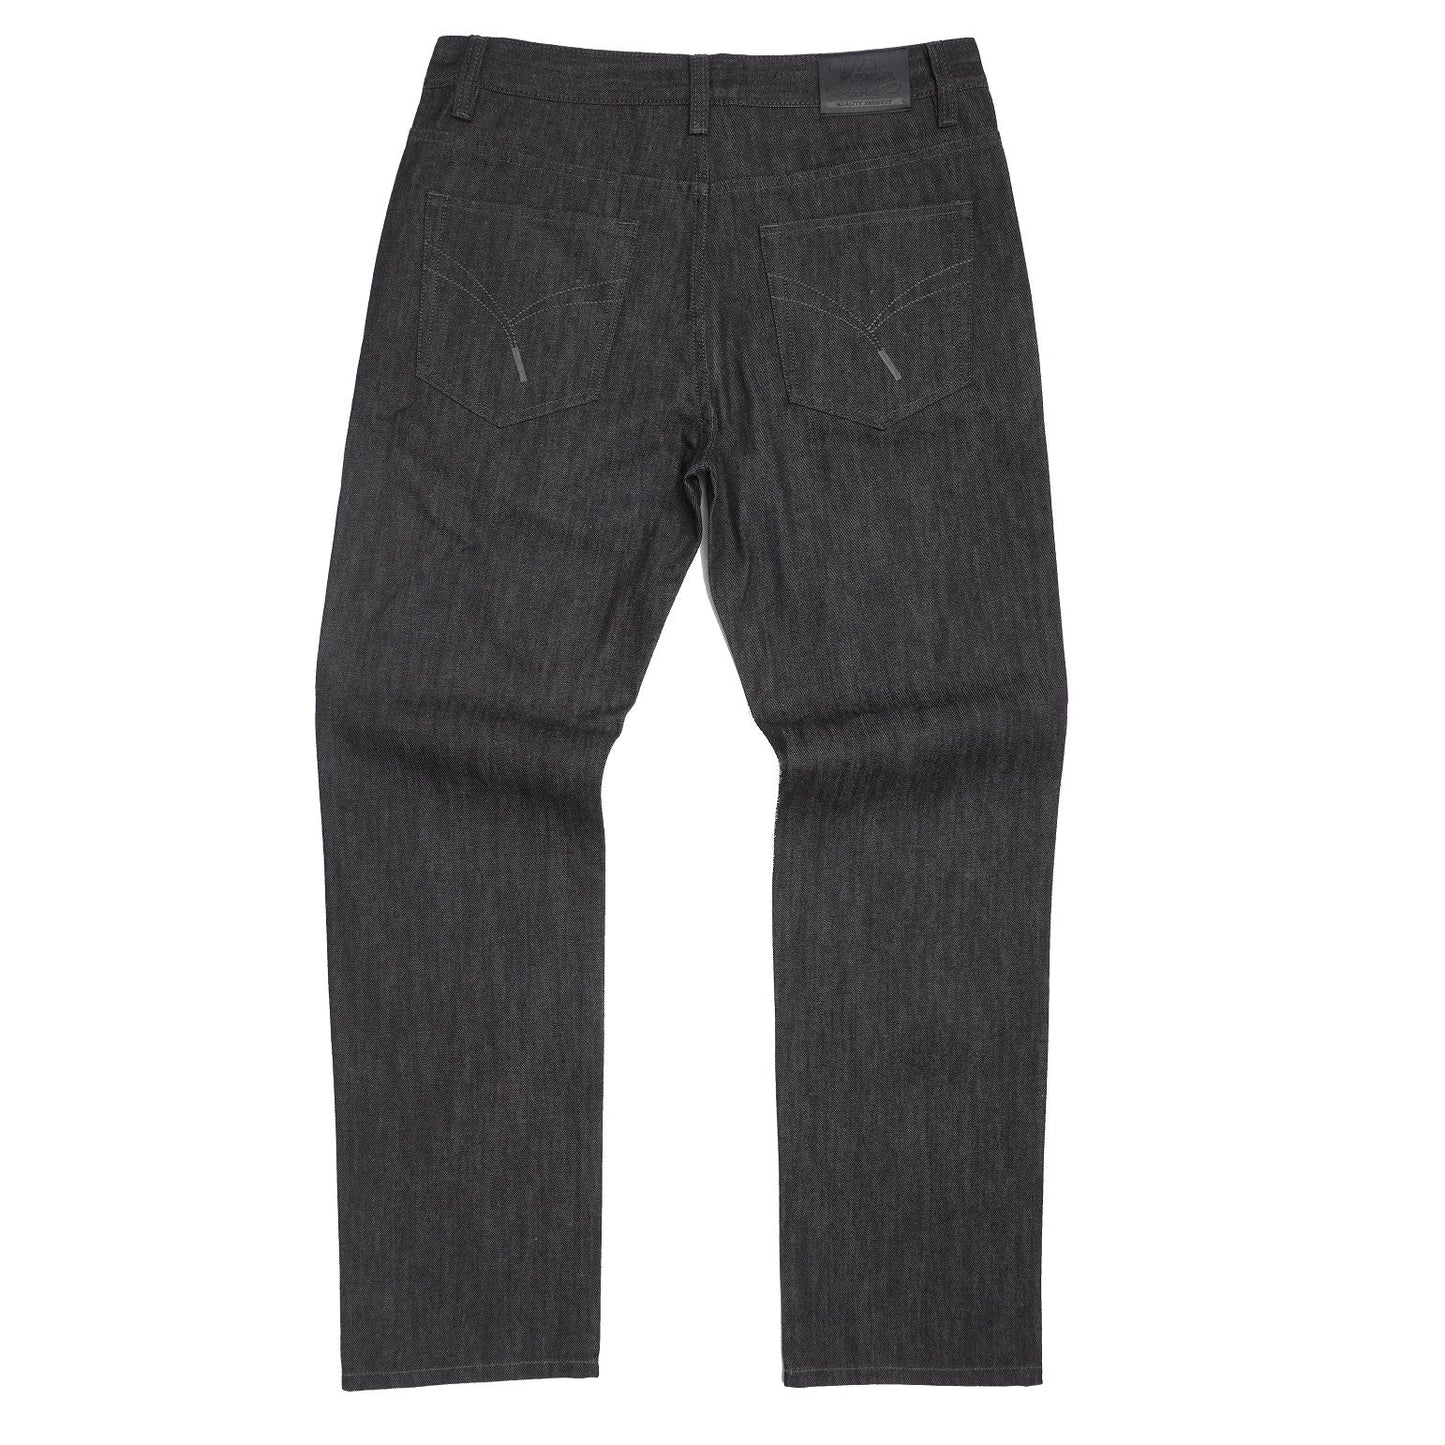 VENO Twill Denim Jeans - Black (V1761)